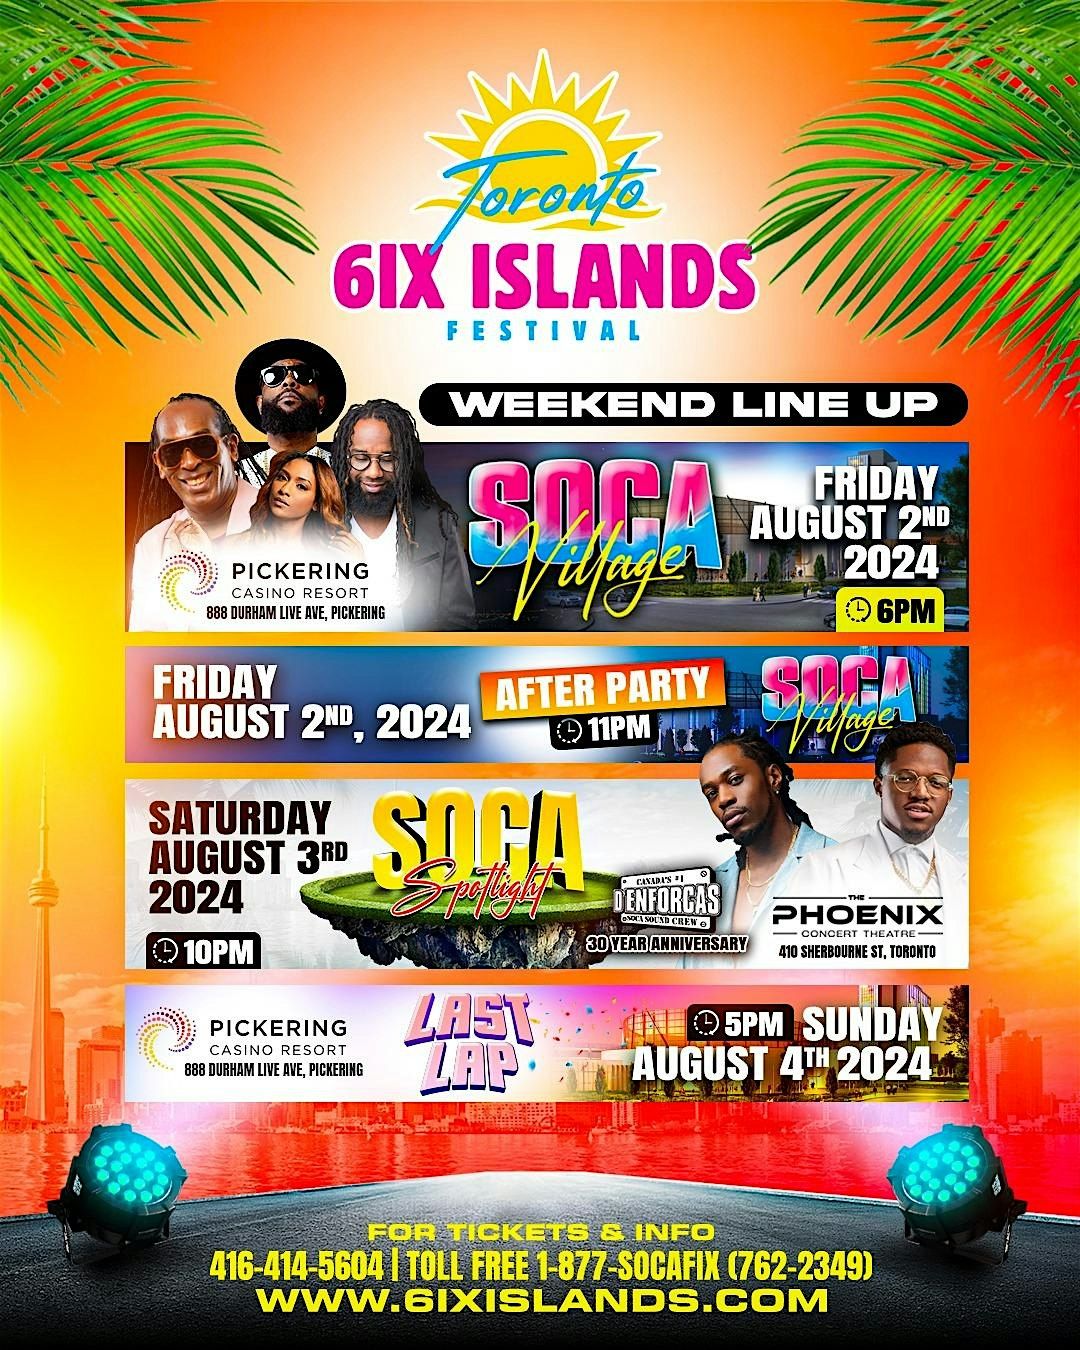 6ix Islands Festival ALL ACCESS WEEKEND VIP WRISTBAND